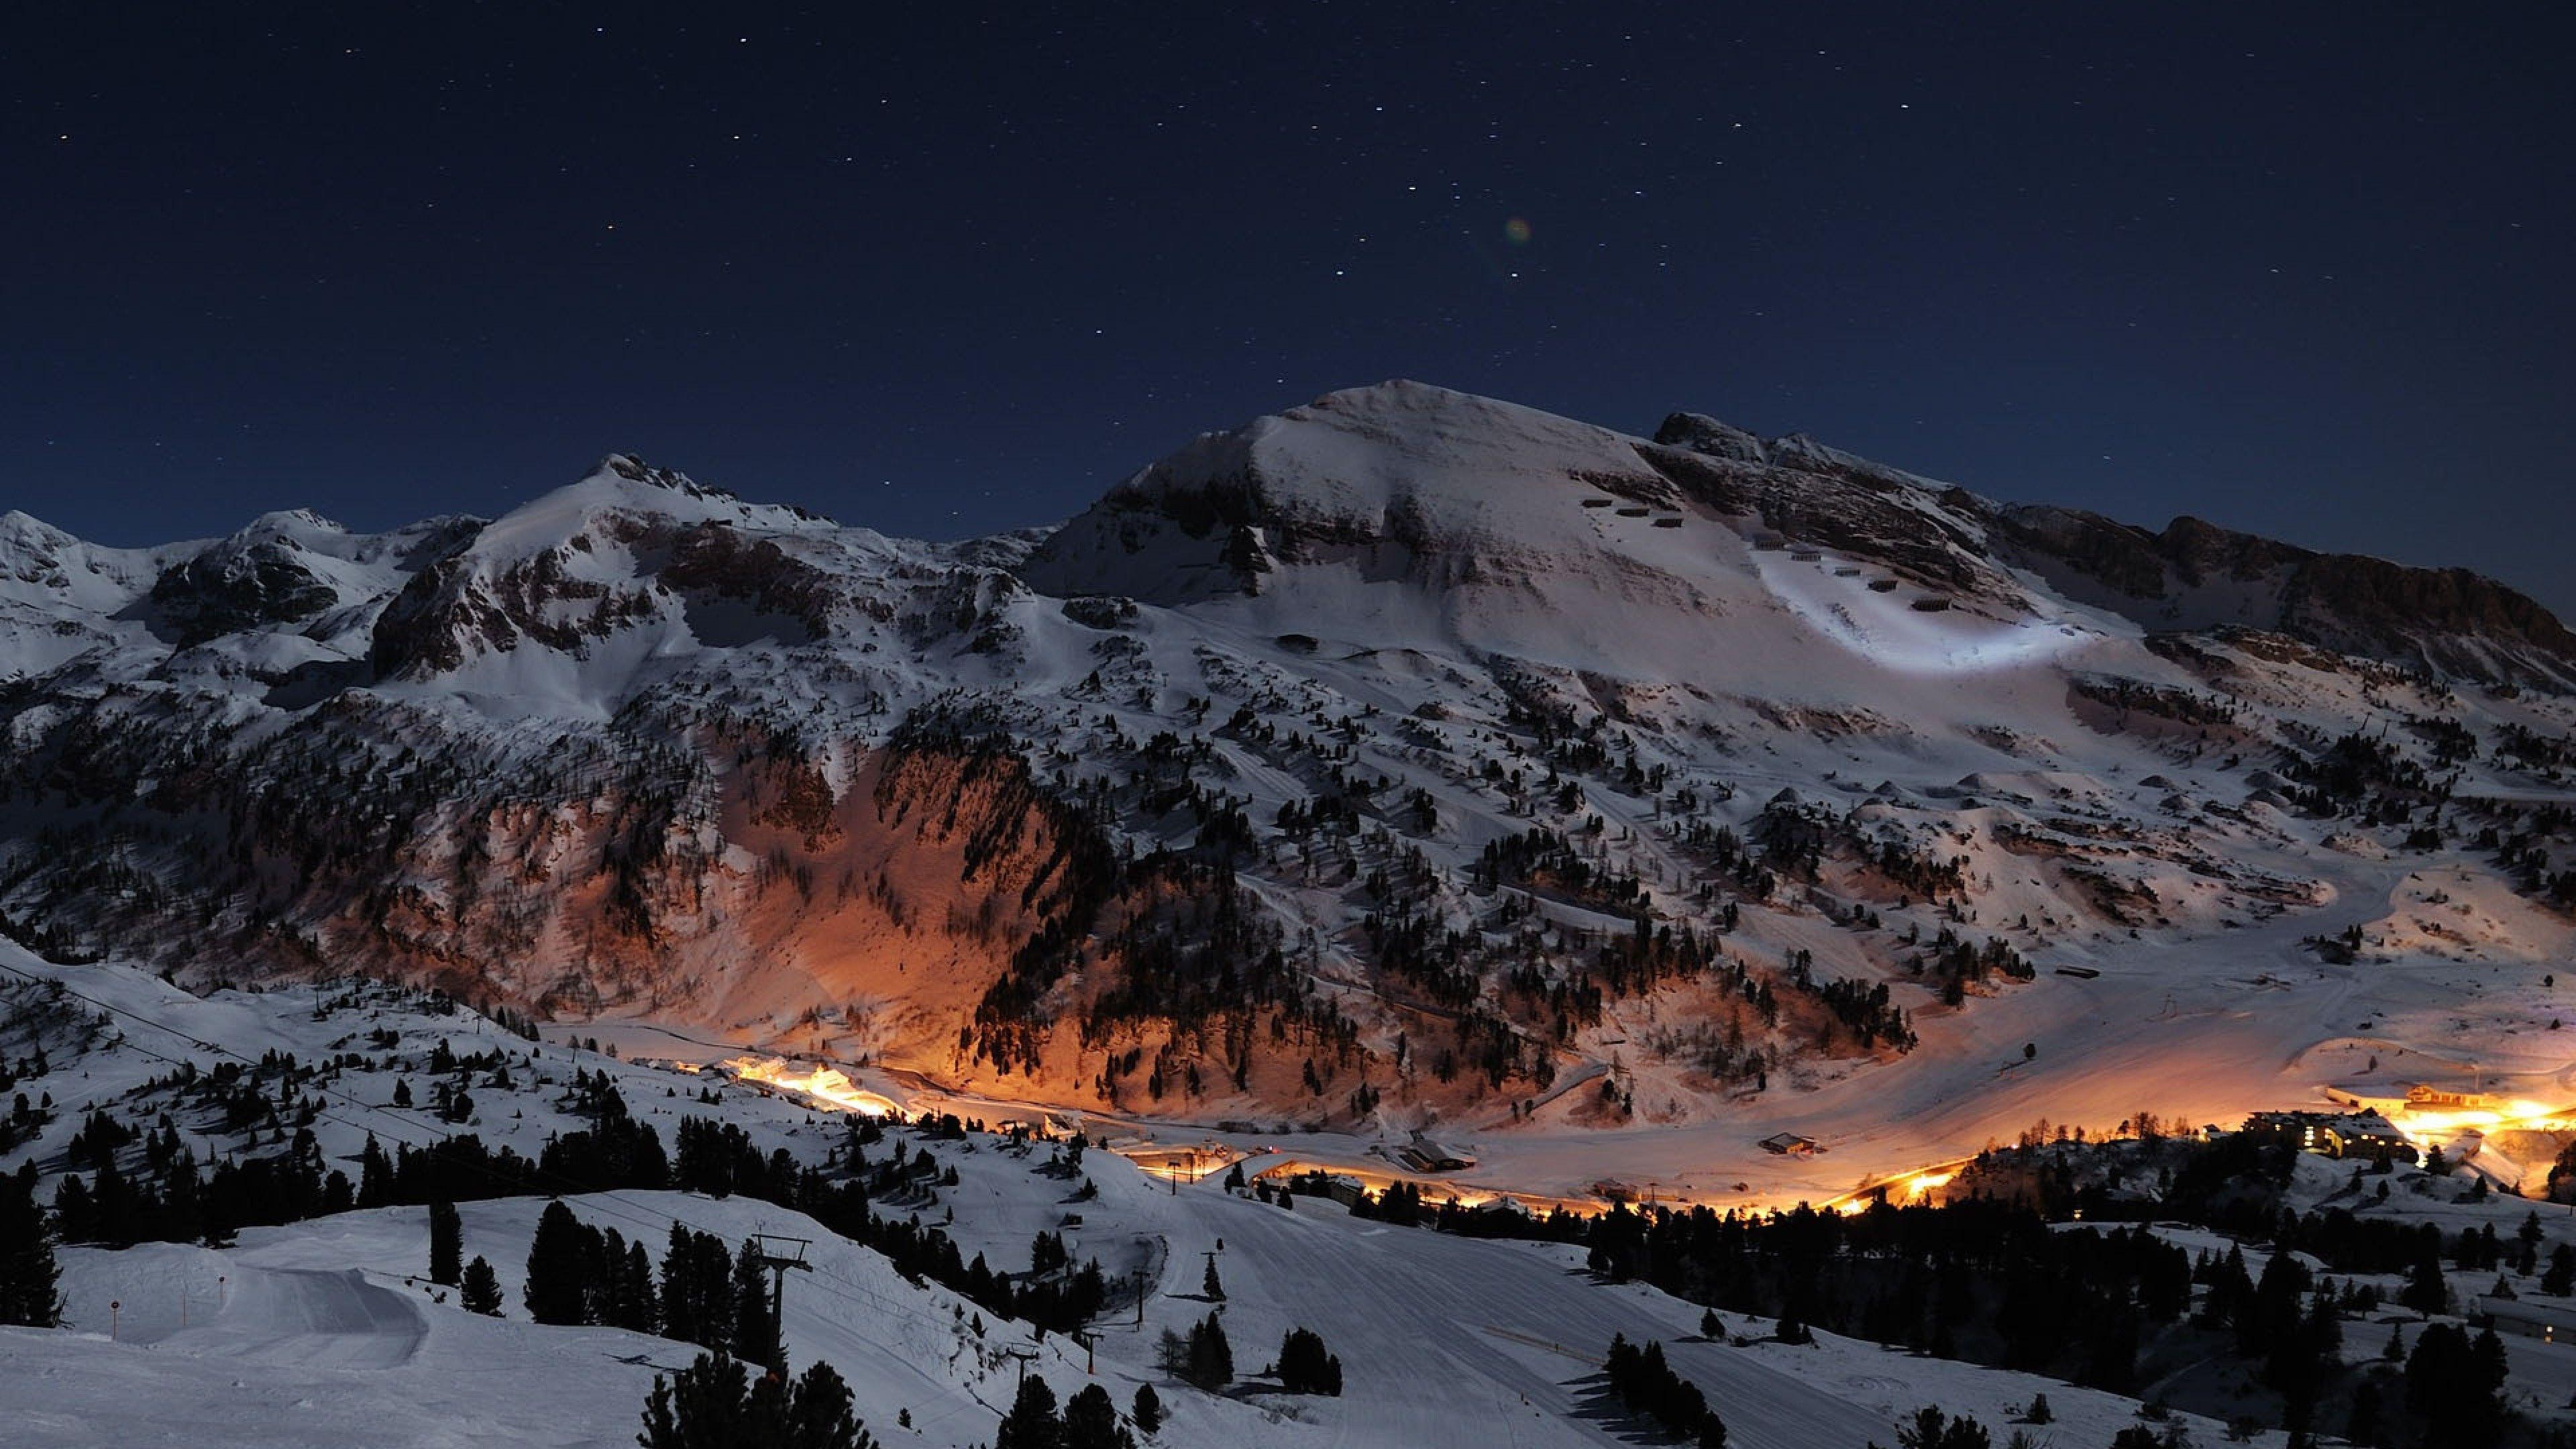 Night Star Alps 4k HD Wallpaper. Mountain wallpaper